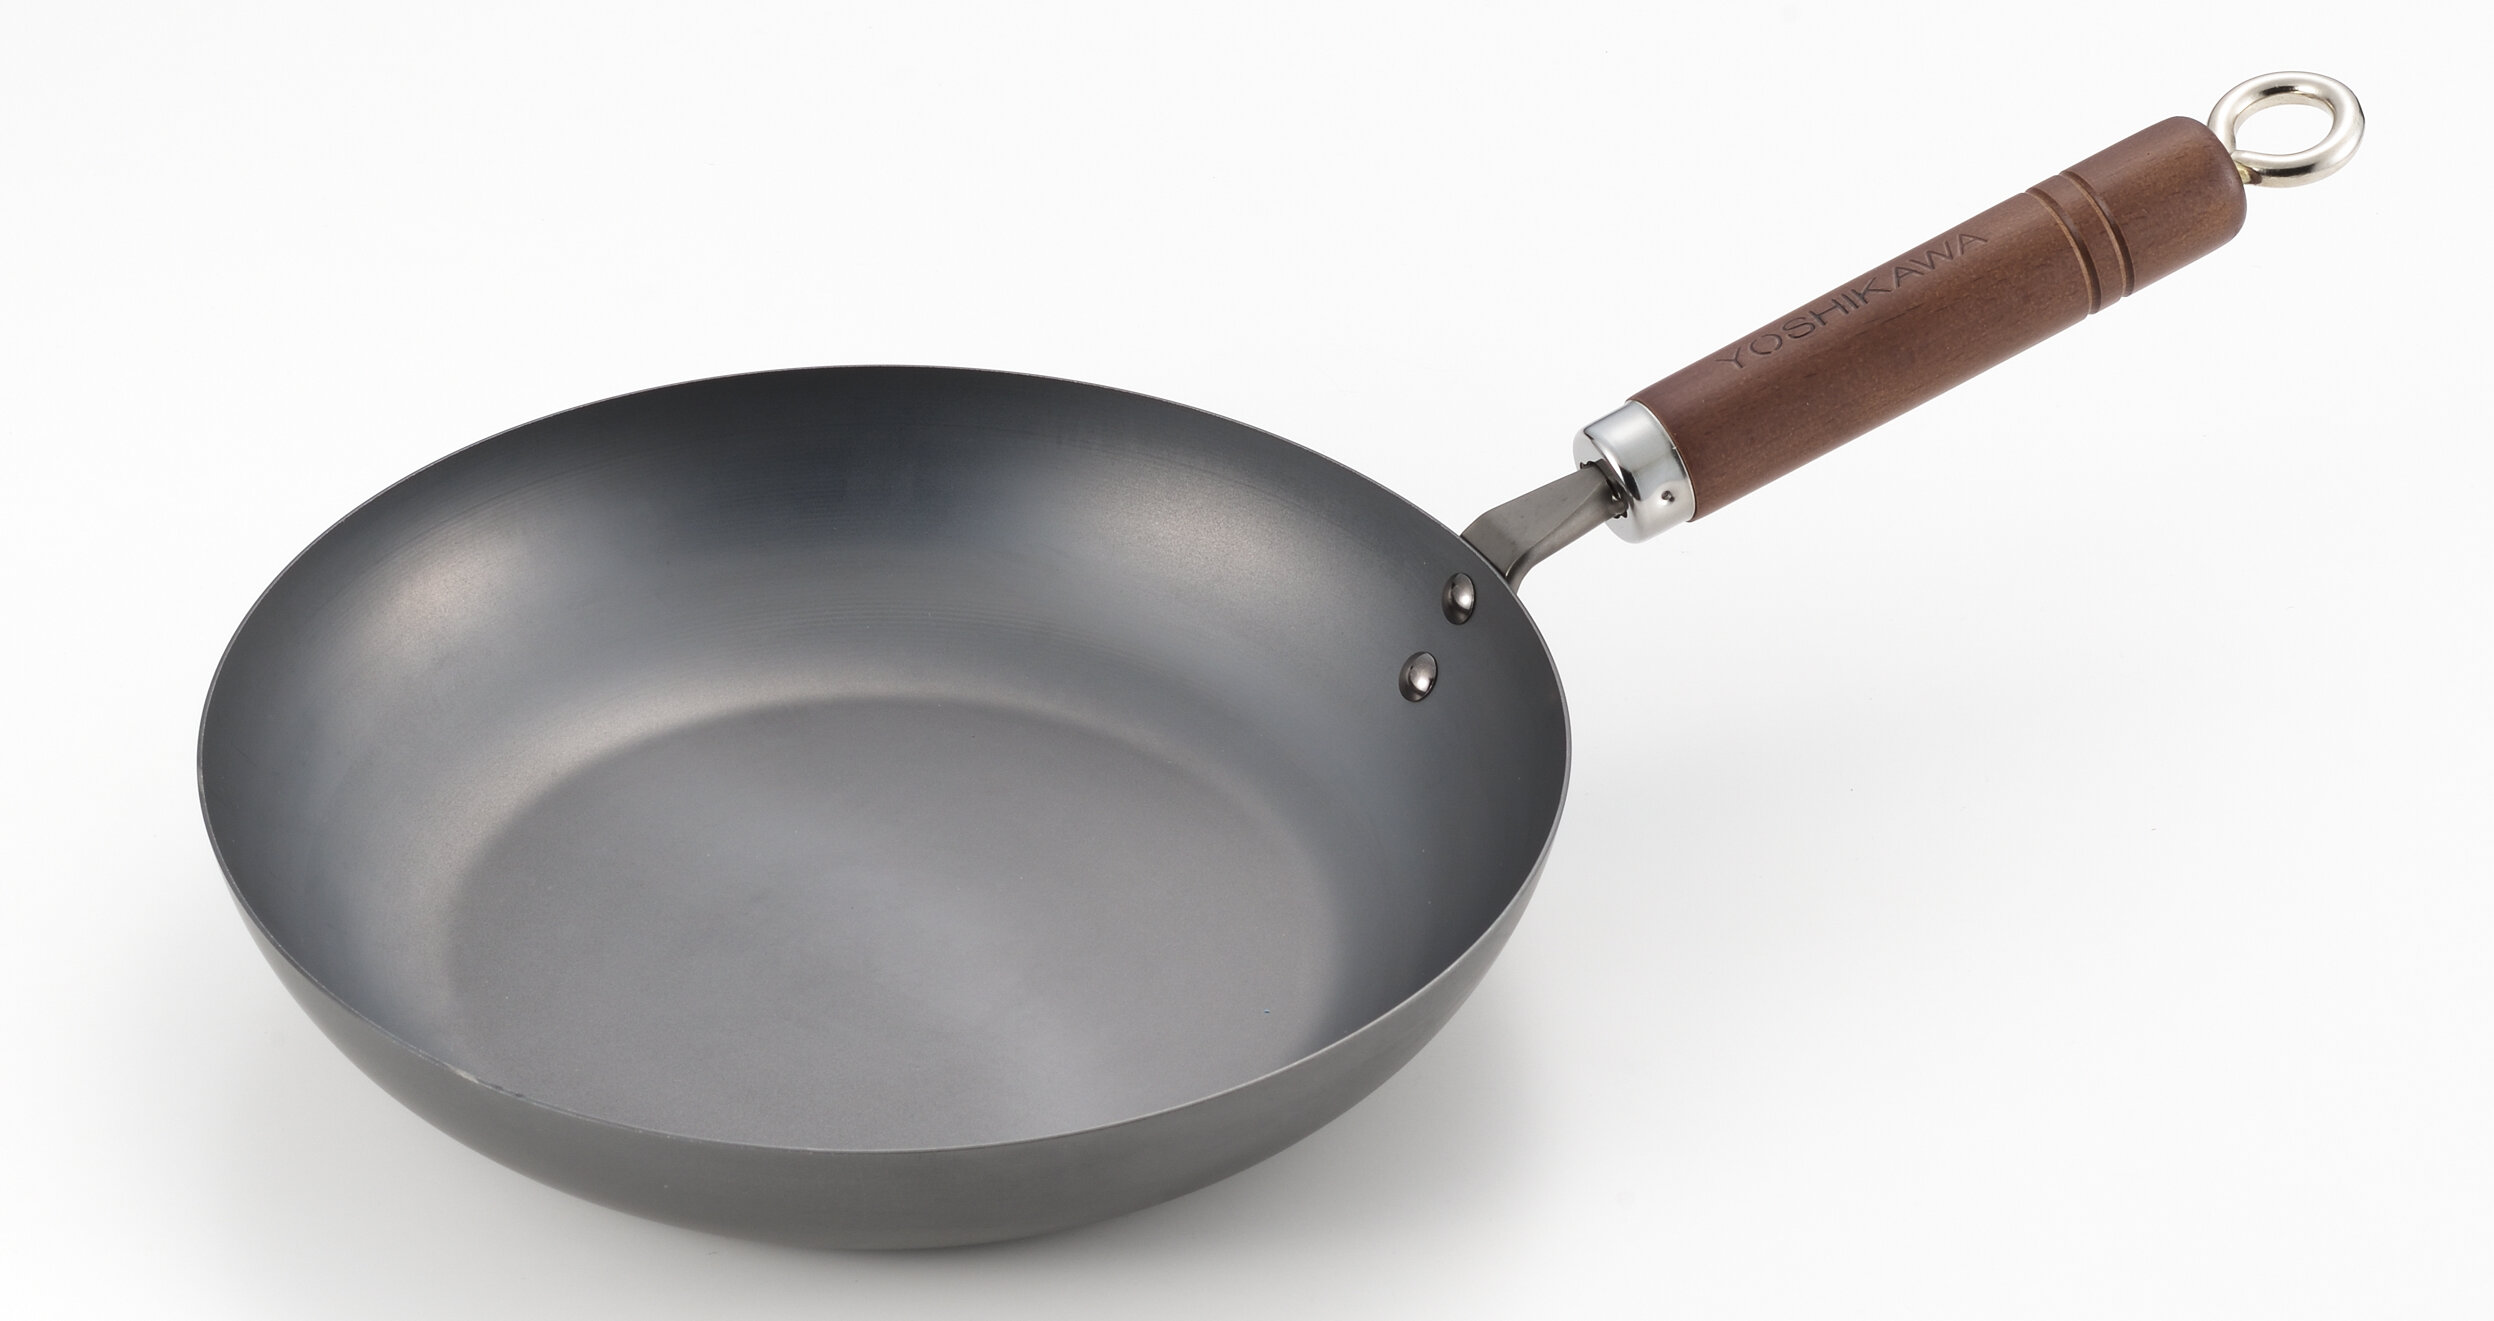 Carbon Steel Cookware Set - Sardel, Accessibly App